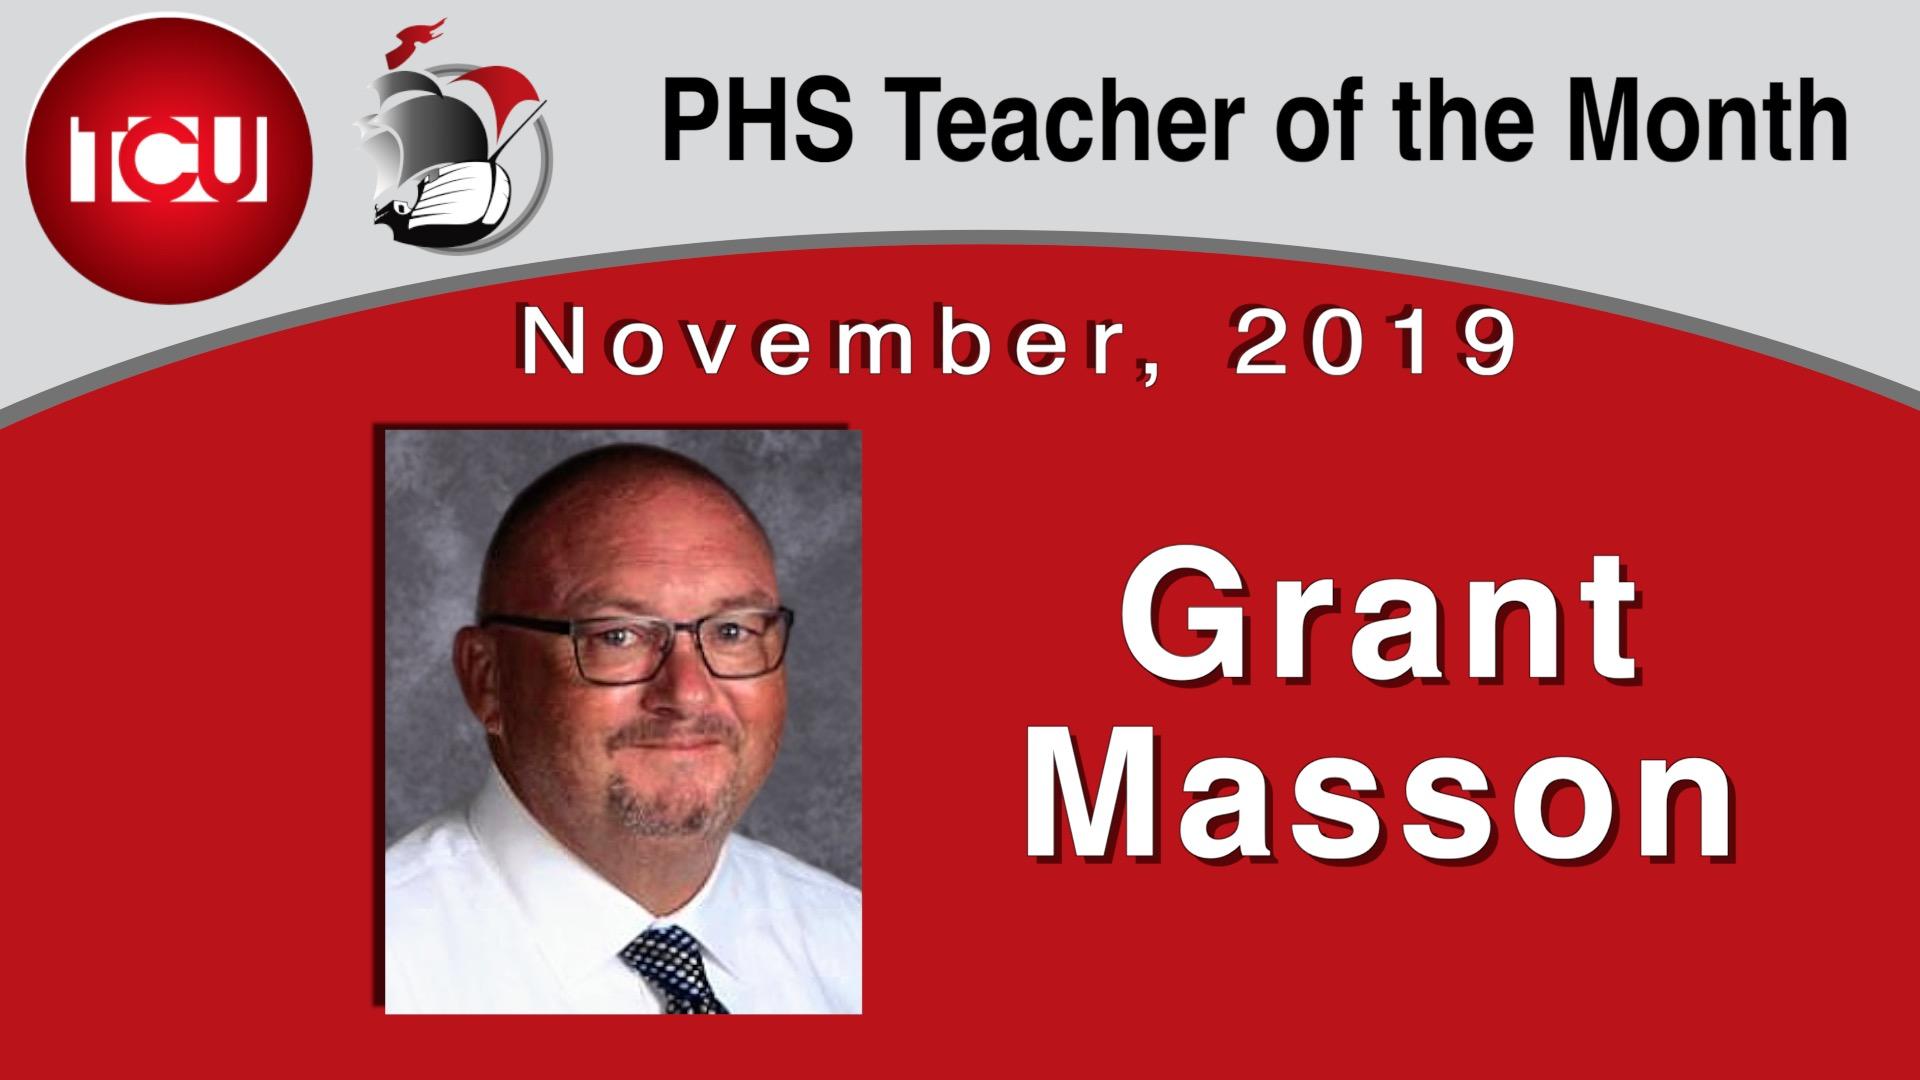 PHS Teacher of the Month November, 2019 Grant Masson with TCU & PHS Logo